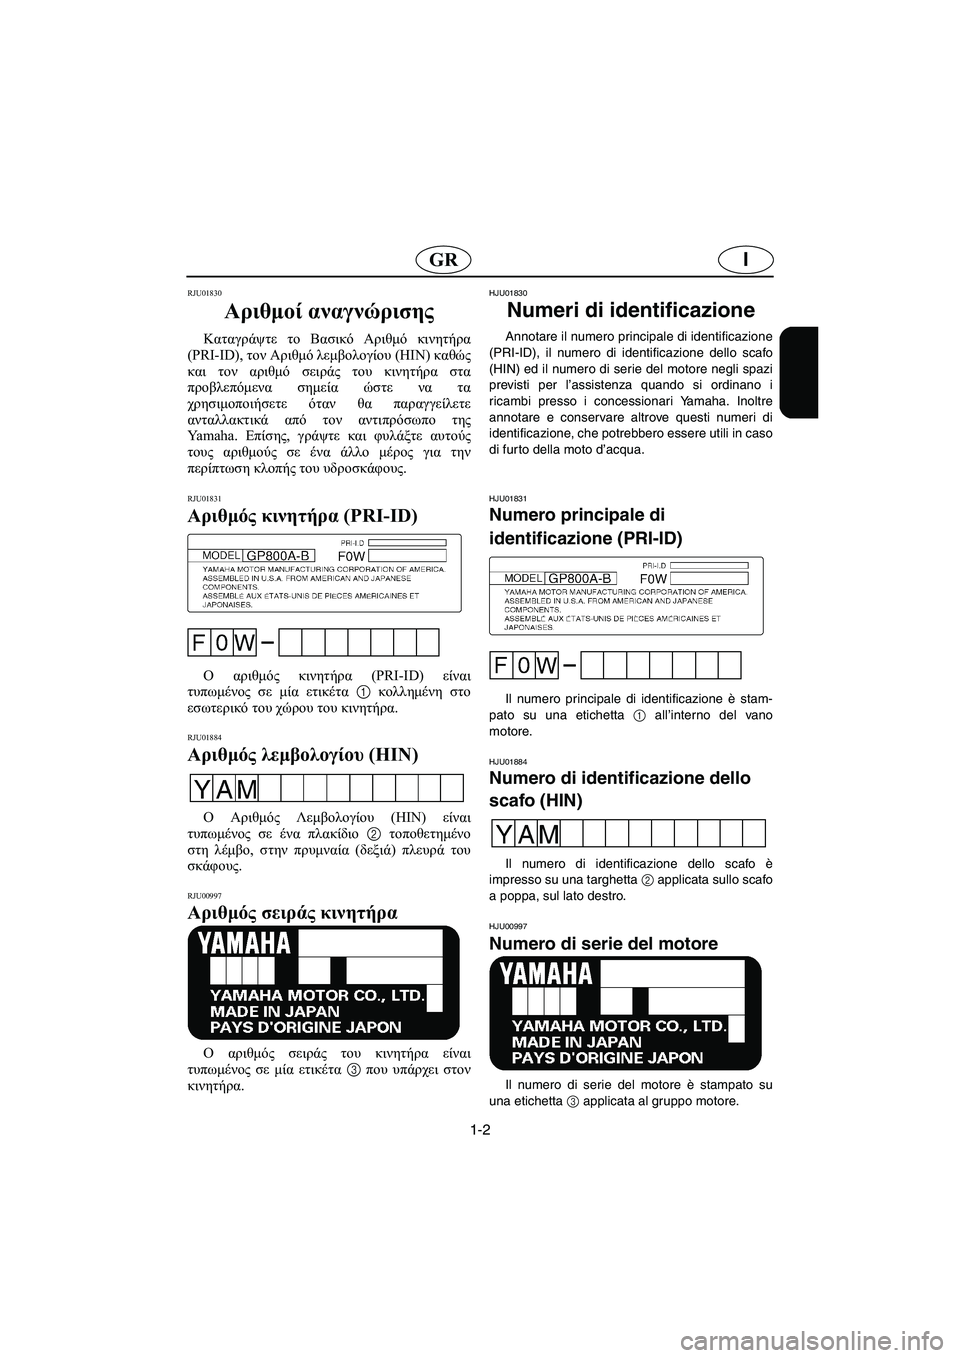 YAMAHA GP800R 2003  Manuale duso (in Italian) 1-2
IGR
RJU01830 
Αριθμοί αναγνώρισης  
Καταγράψτε το Βασικό Αριθμό κινητήρα
(PRI-ID), τον Αριθμό λεμβολογίου (HIN) καθώς
κ�